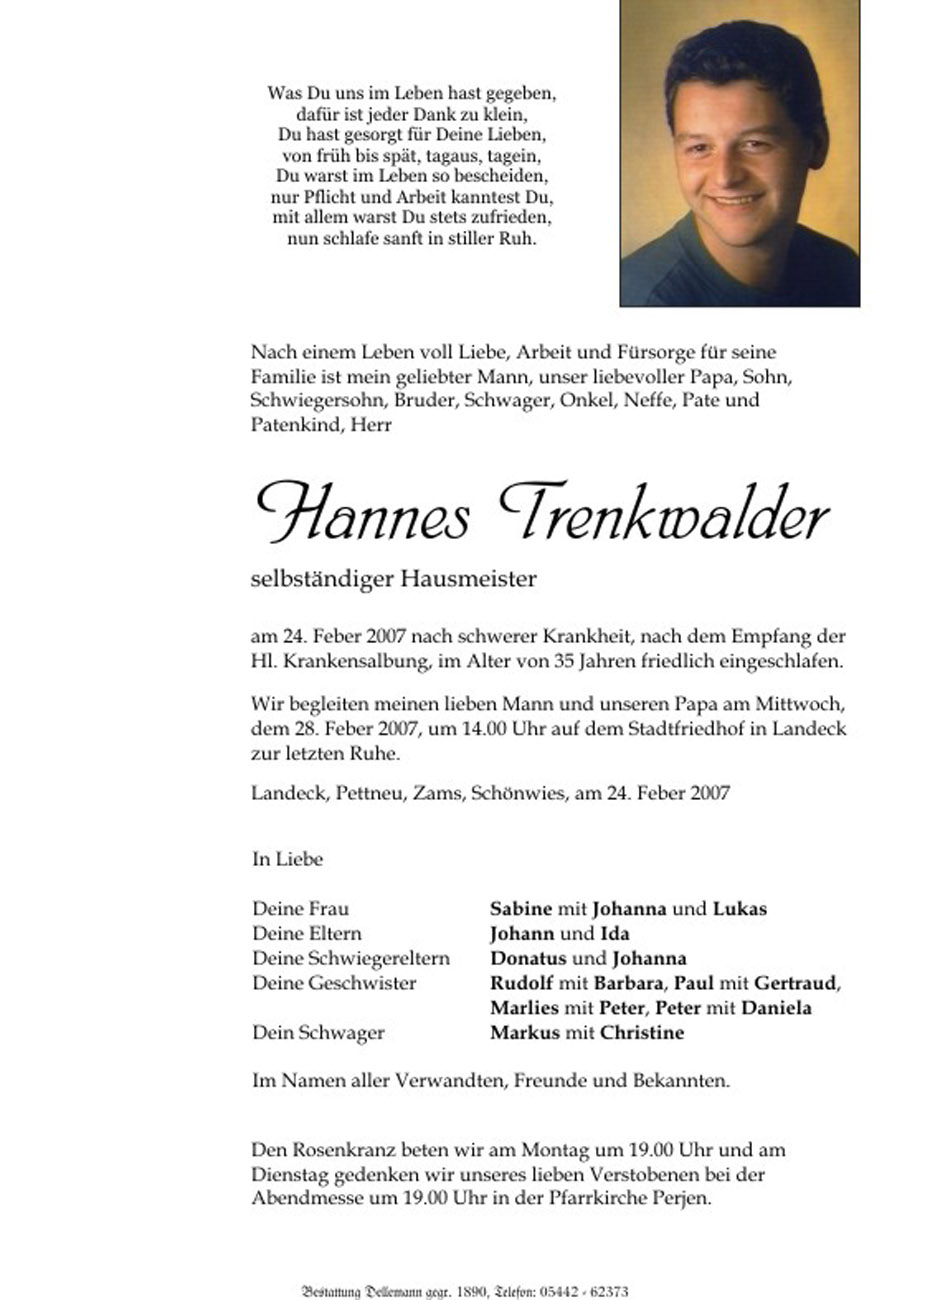   Hannes Trenkwalder